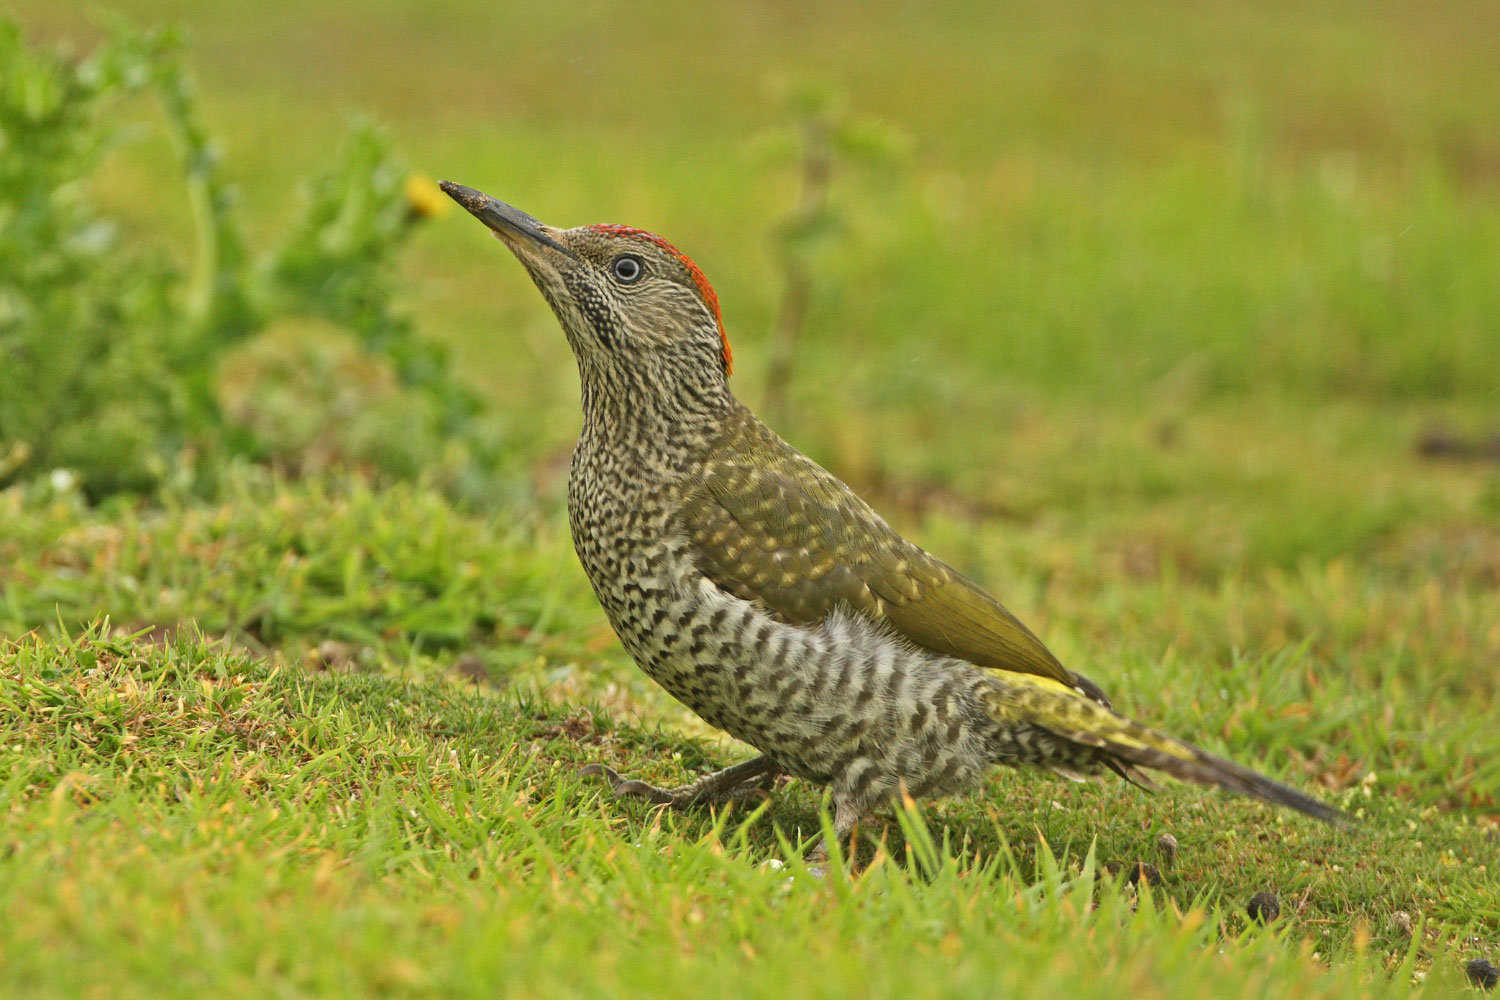 British woodpecker photo ID guide - BirdGuides